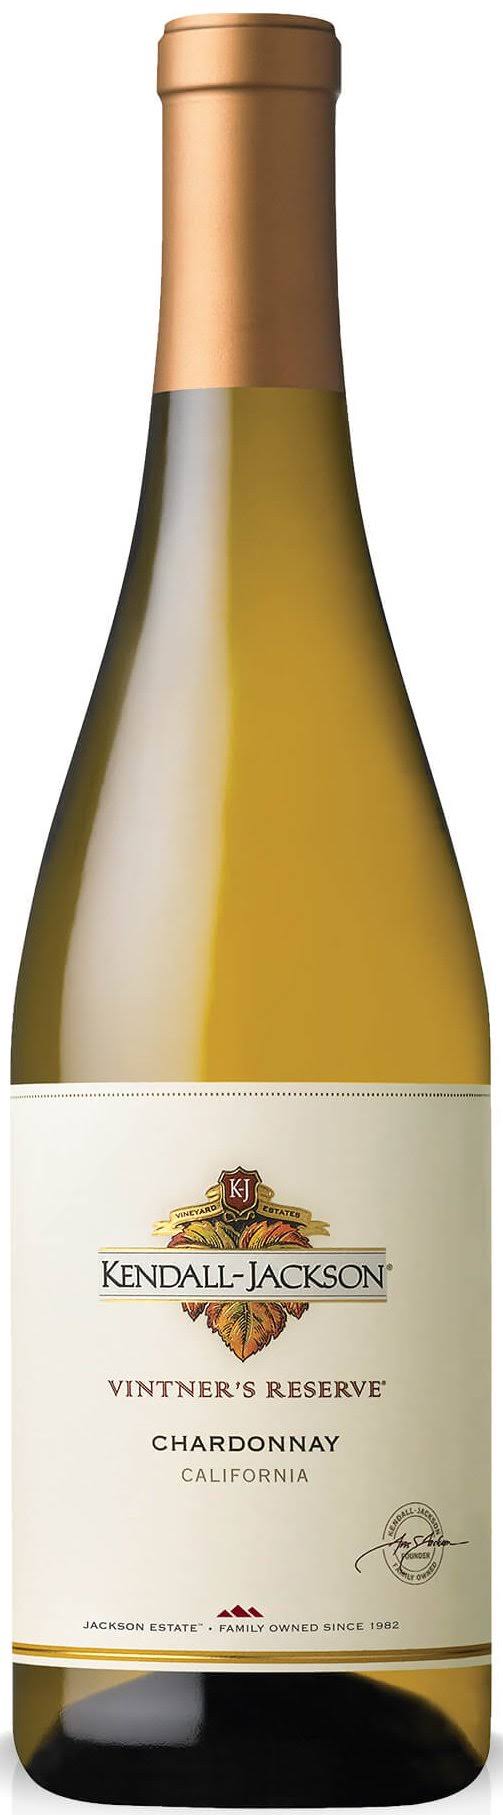 Kendall-Jackson Vintner's Reserve Chardonnay 2019 (750 ml)